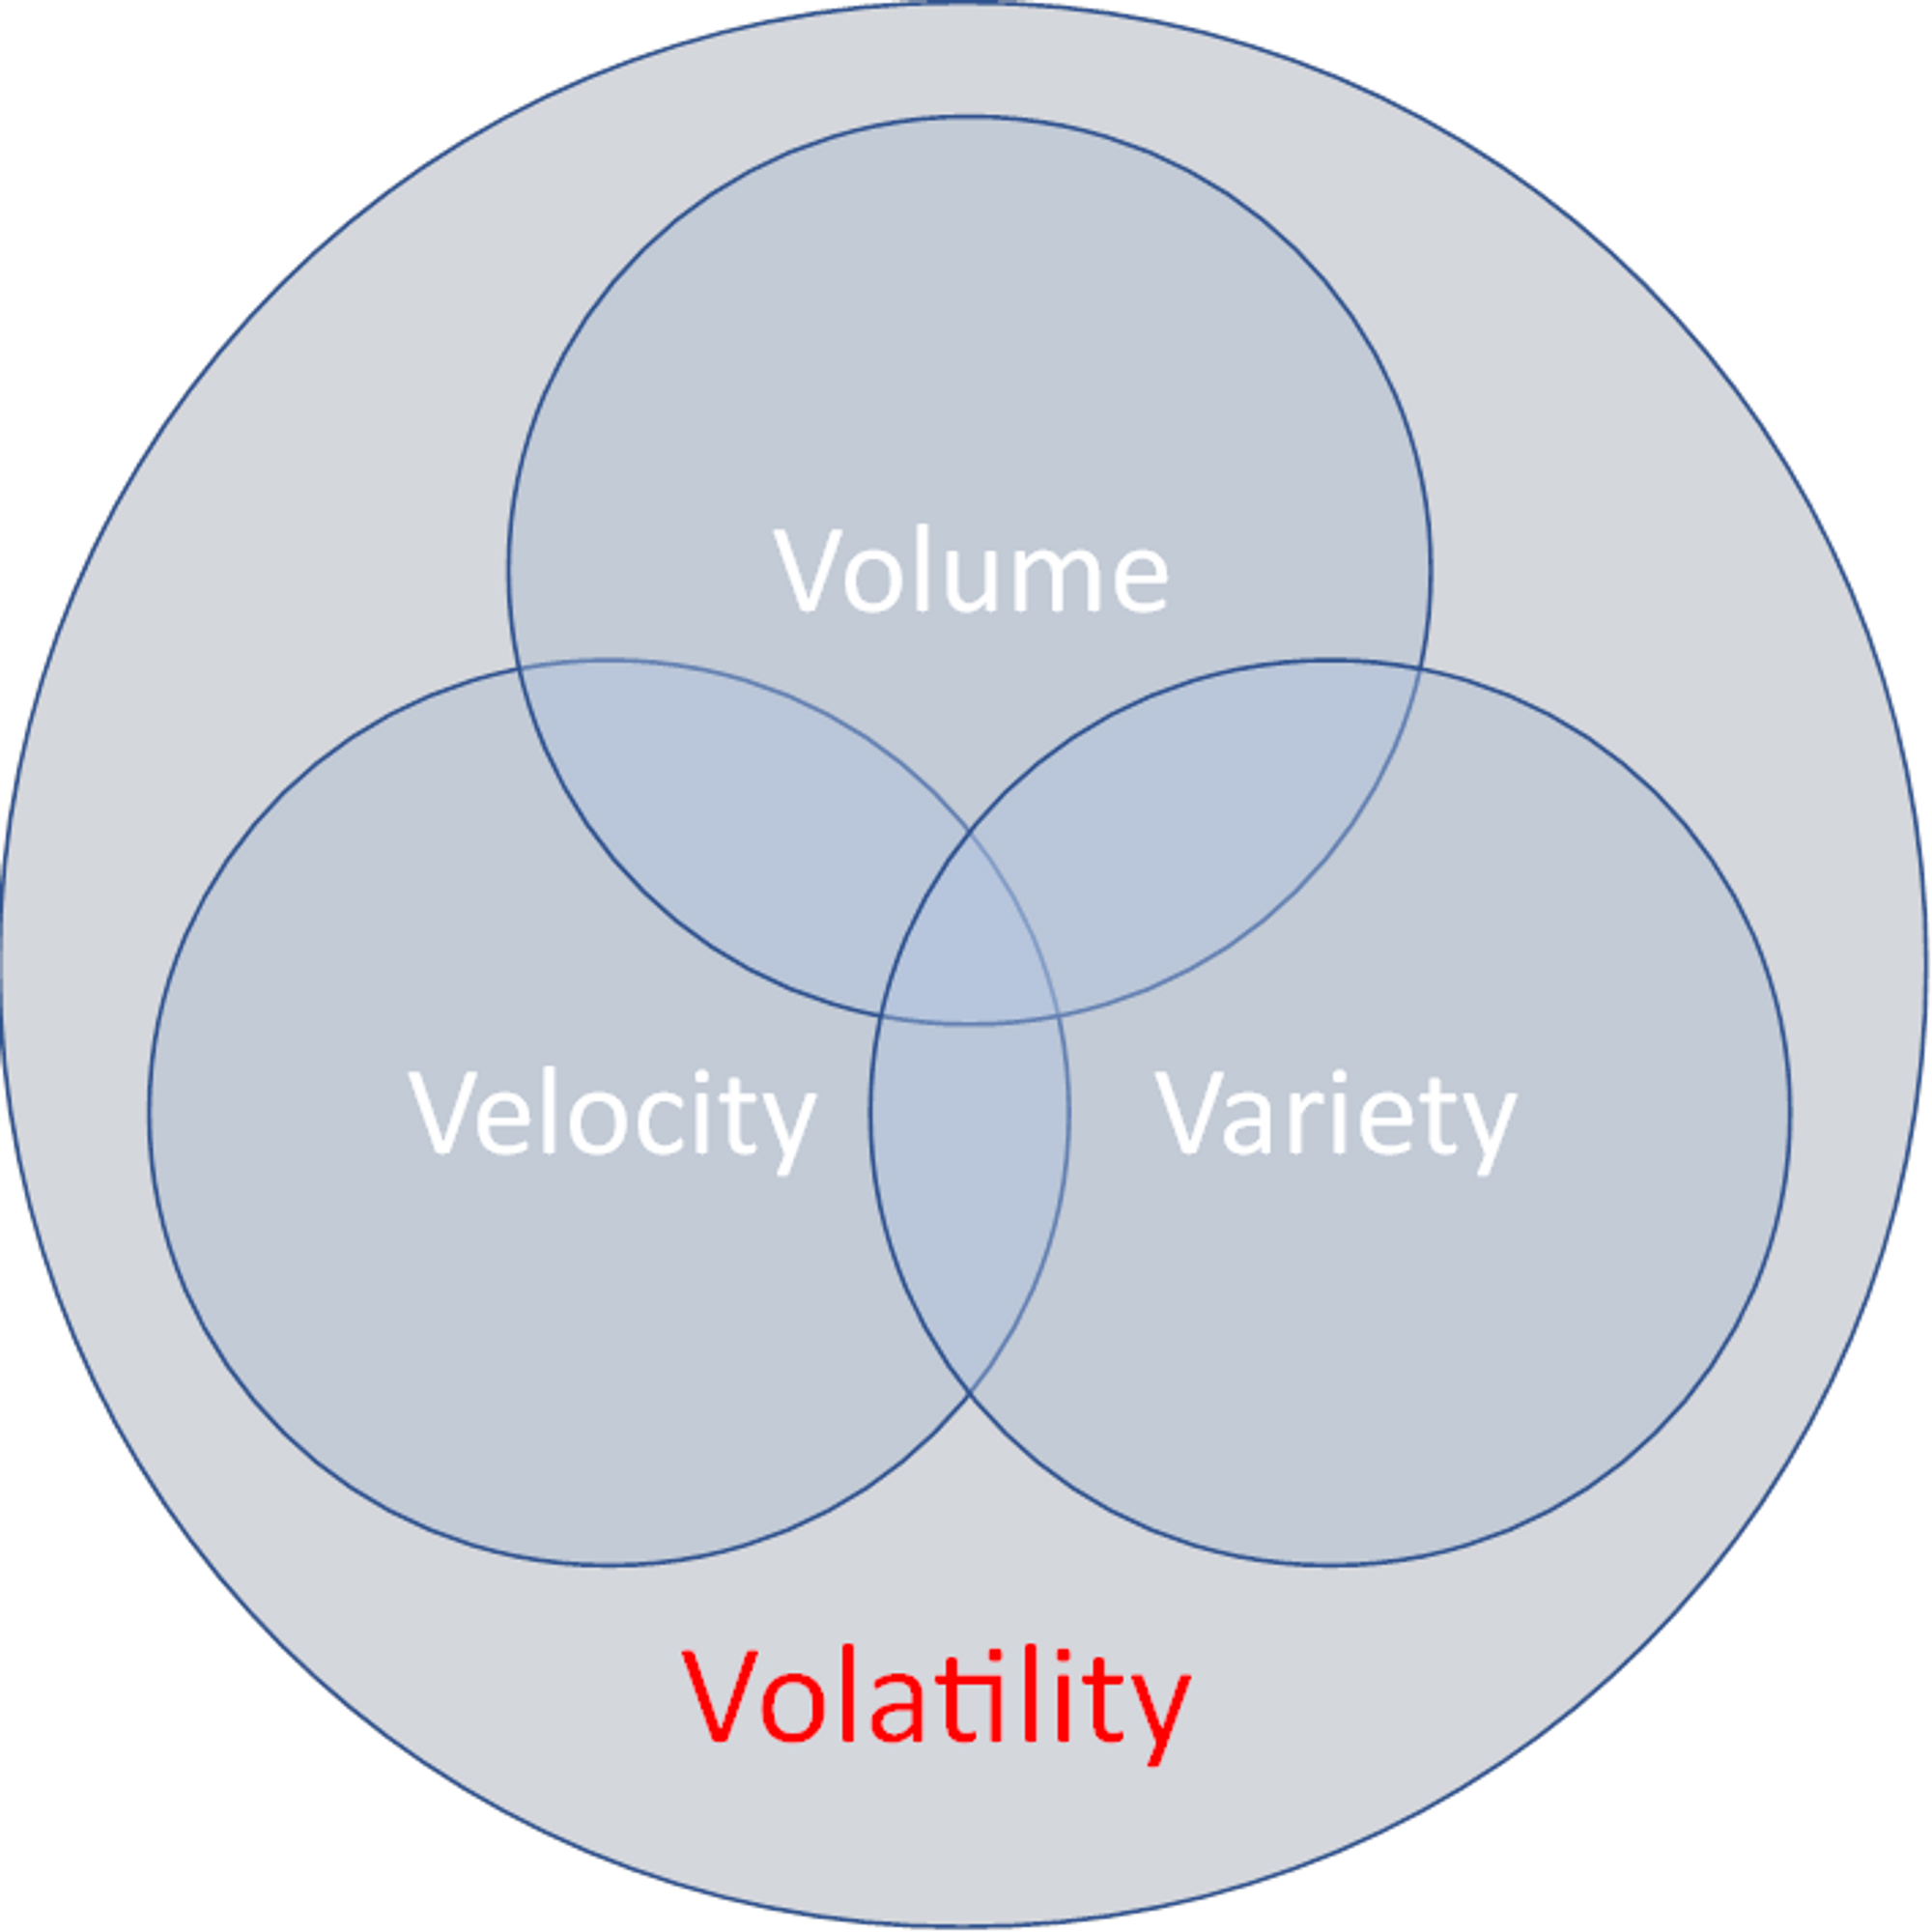 4 Vs Diagram_Volatility Blog Post.